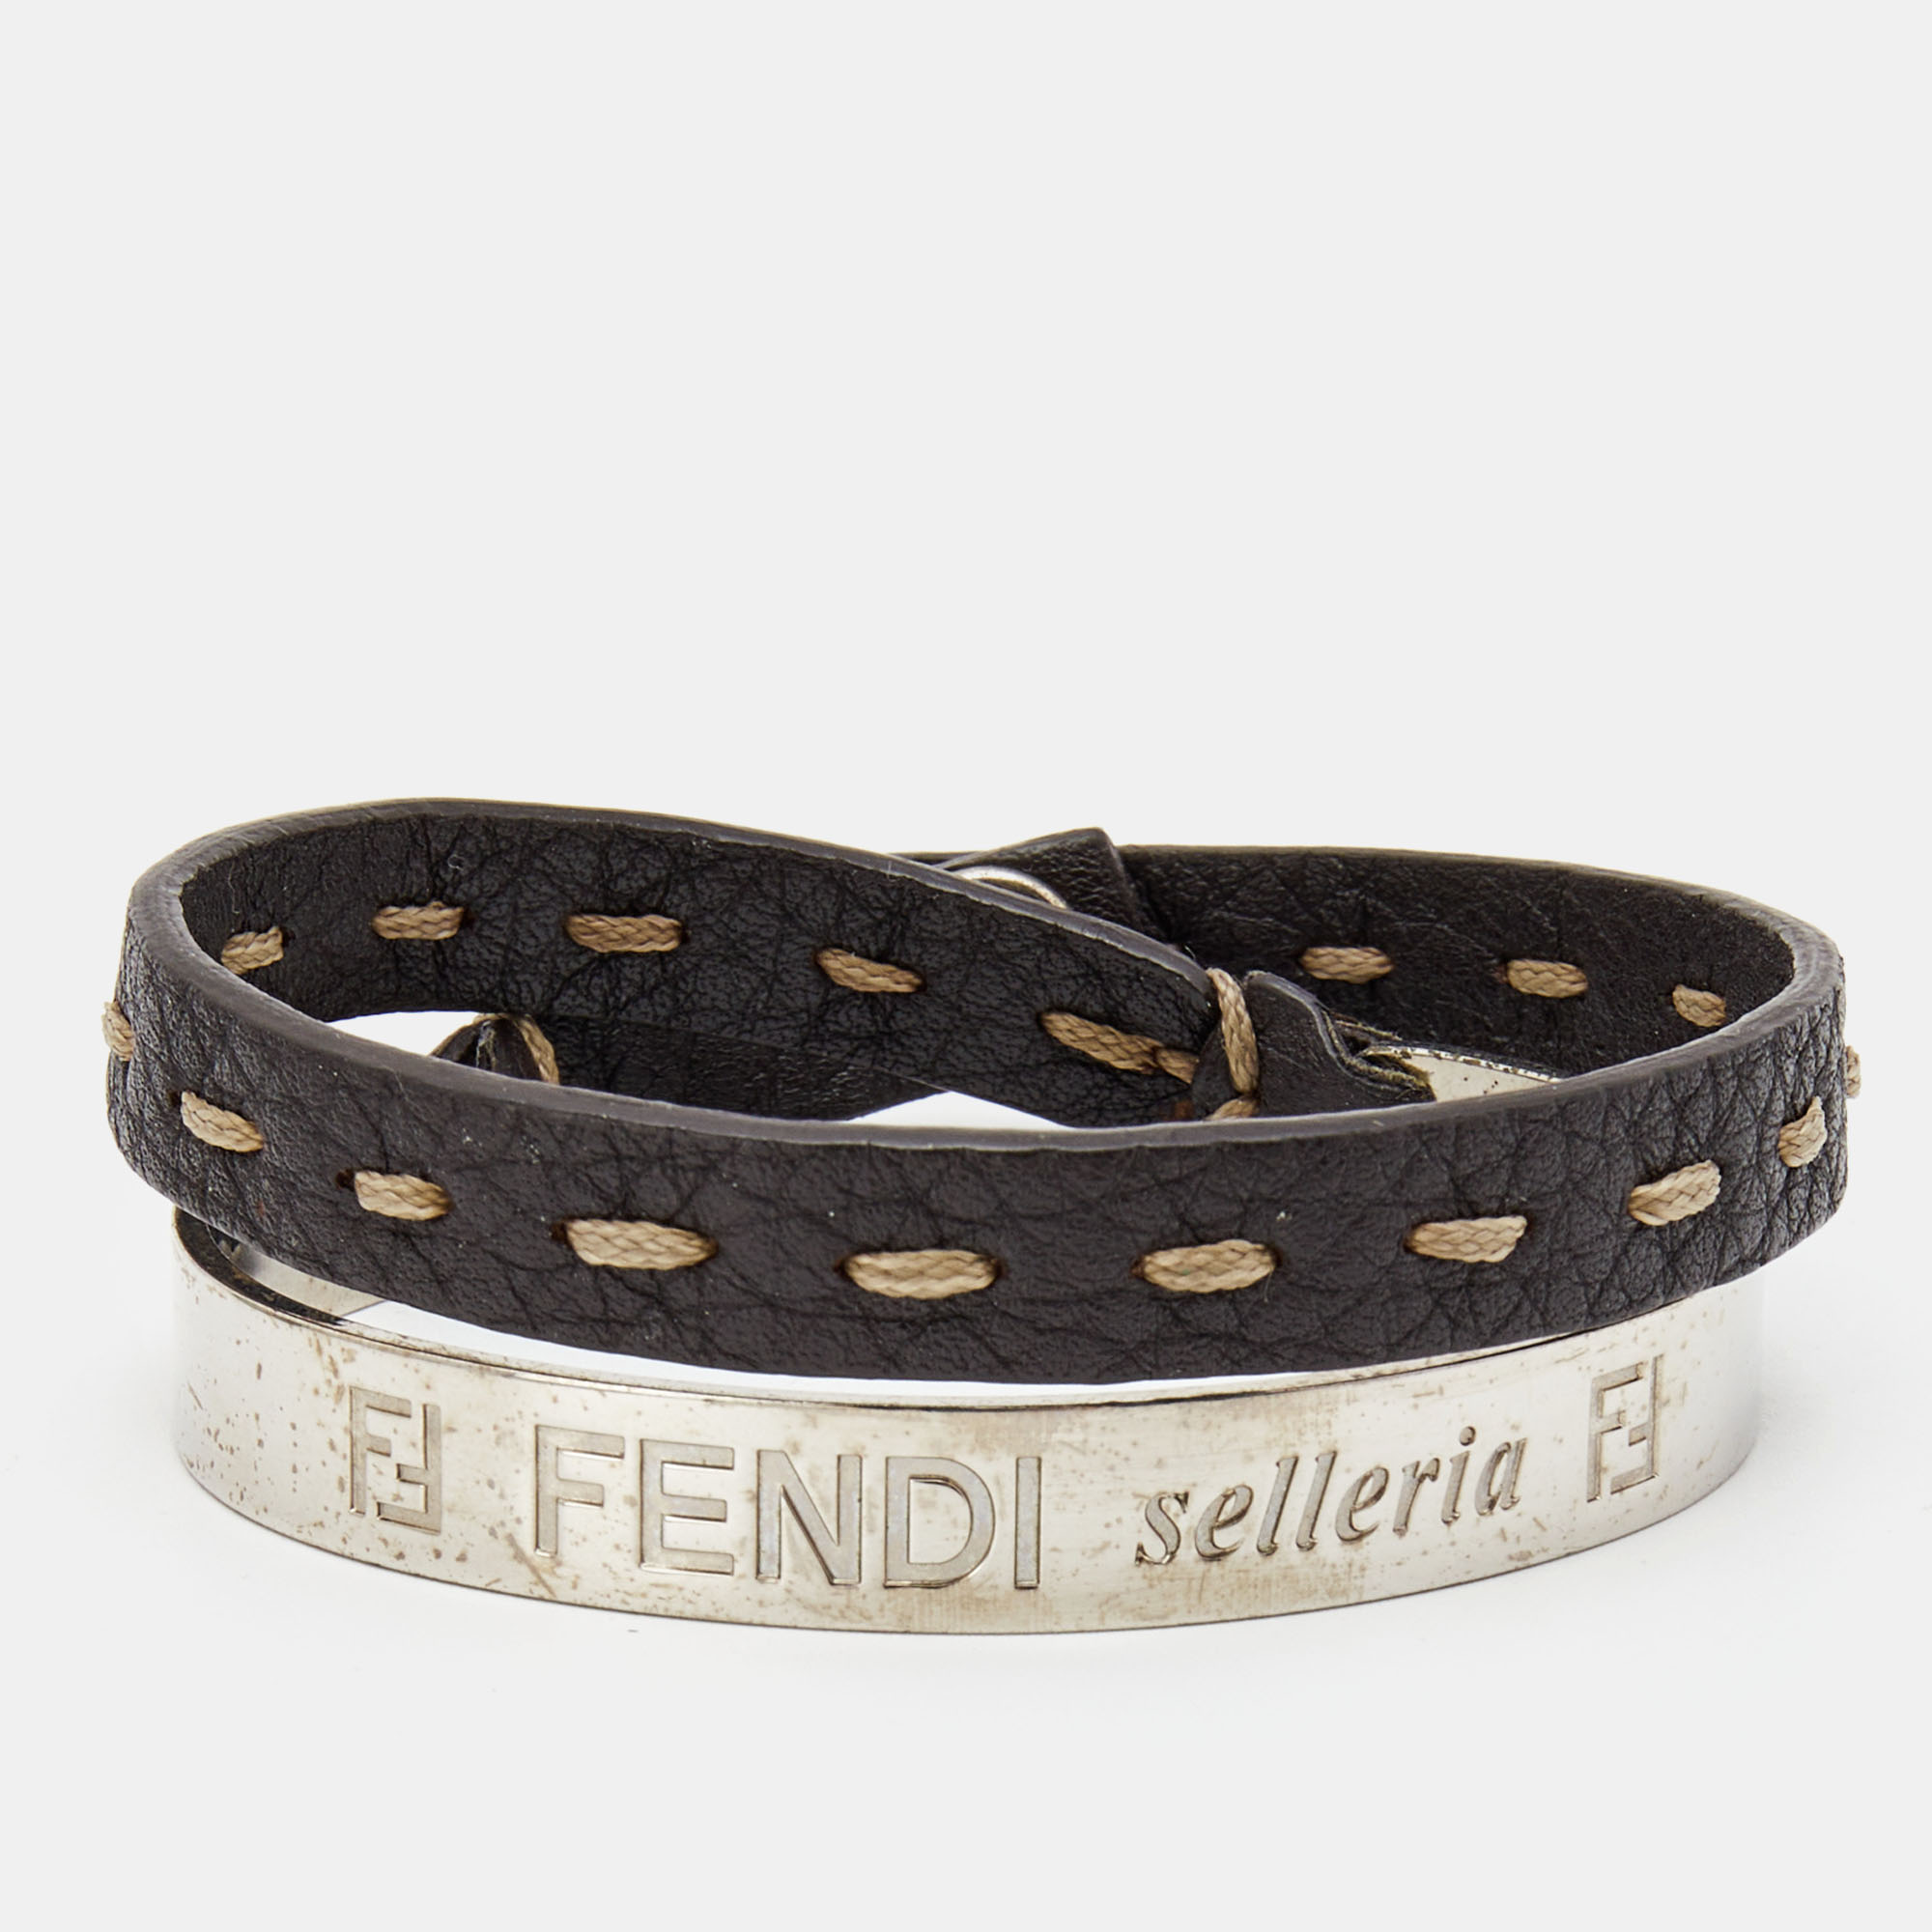 Fendi Selleria Silver Tone Cuff & Metallic Leather Double Wrap Bracelet